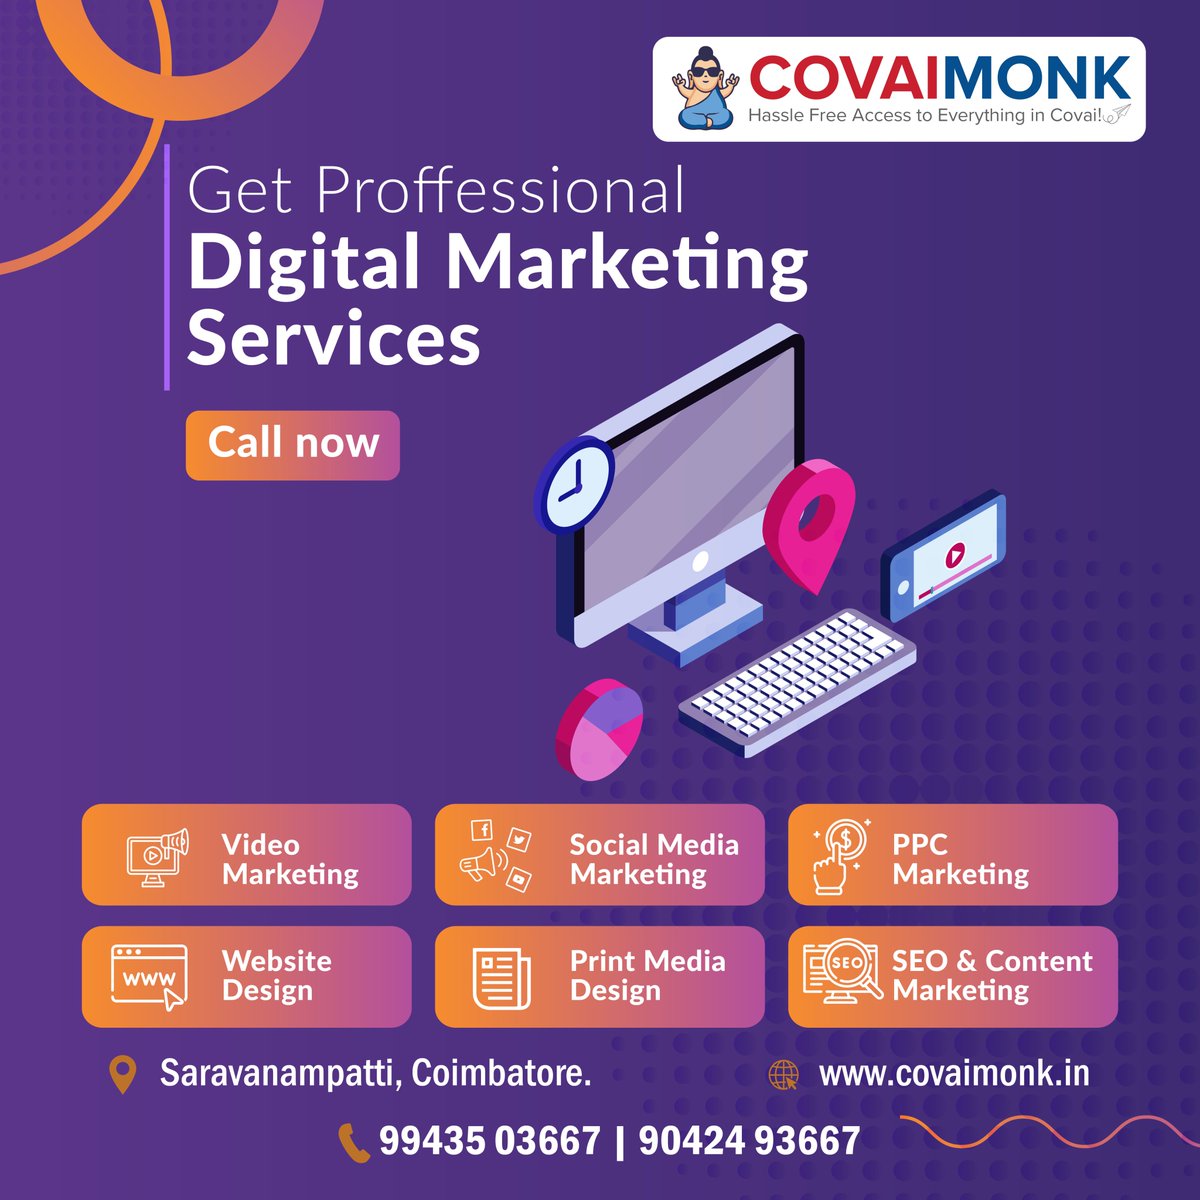 Get Proffessional Digital Marketing Services..!
#covaimonk #twittermarketing #LinkedInMarketing #facebookmarketing #googleadsmarketing #youtubemarketing #printing #branding